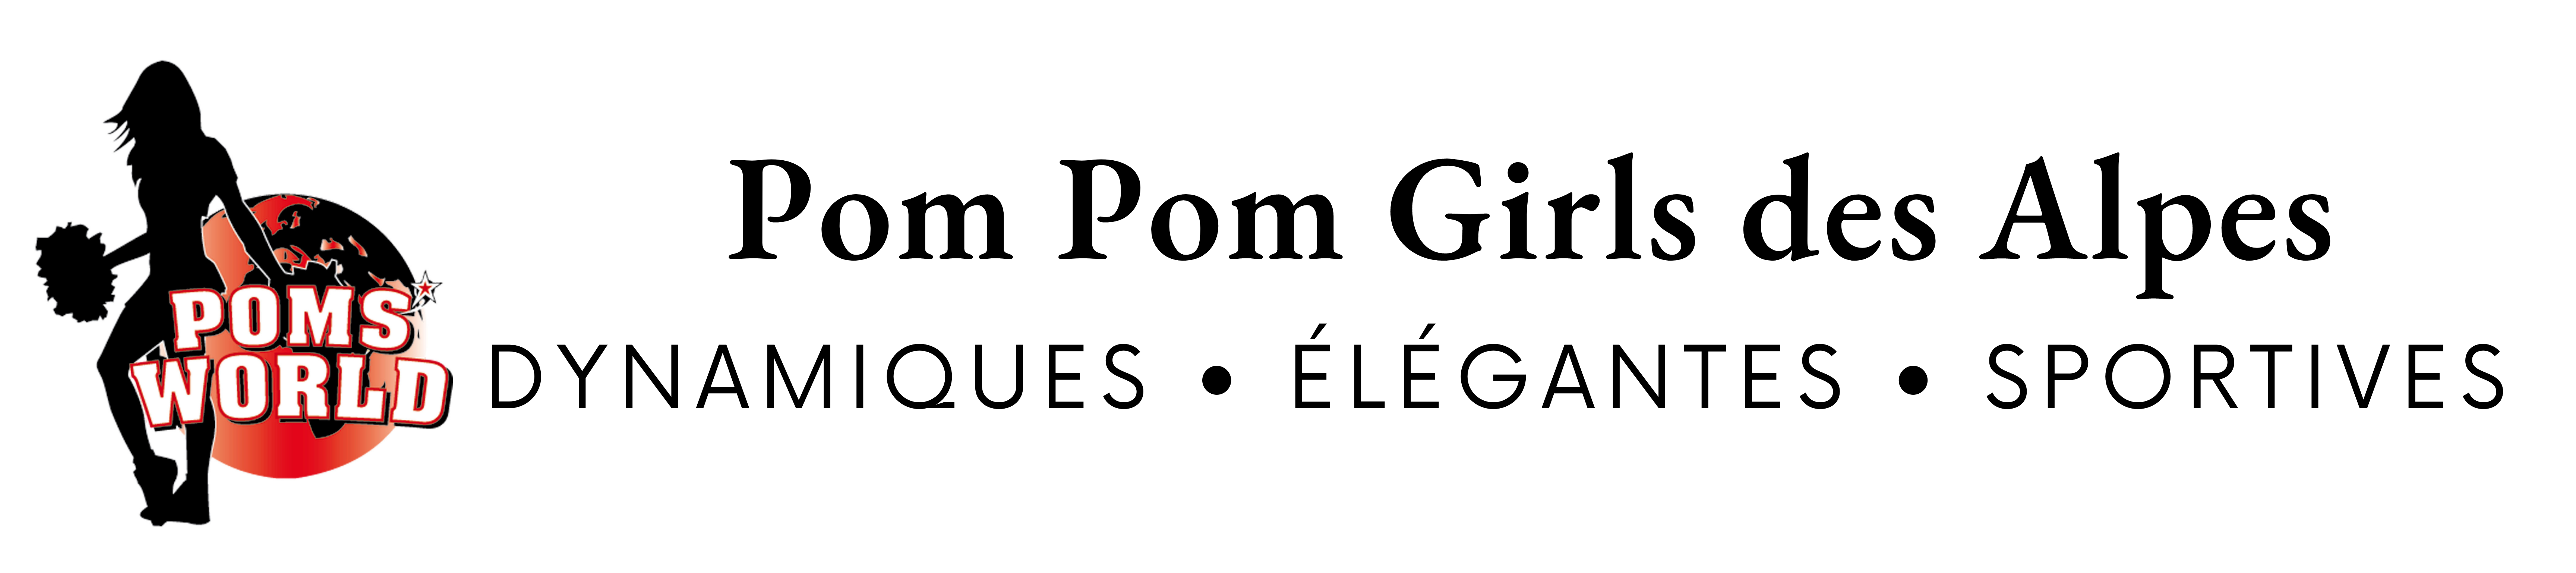 Pom Pom Girls des Alpes